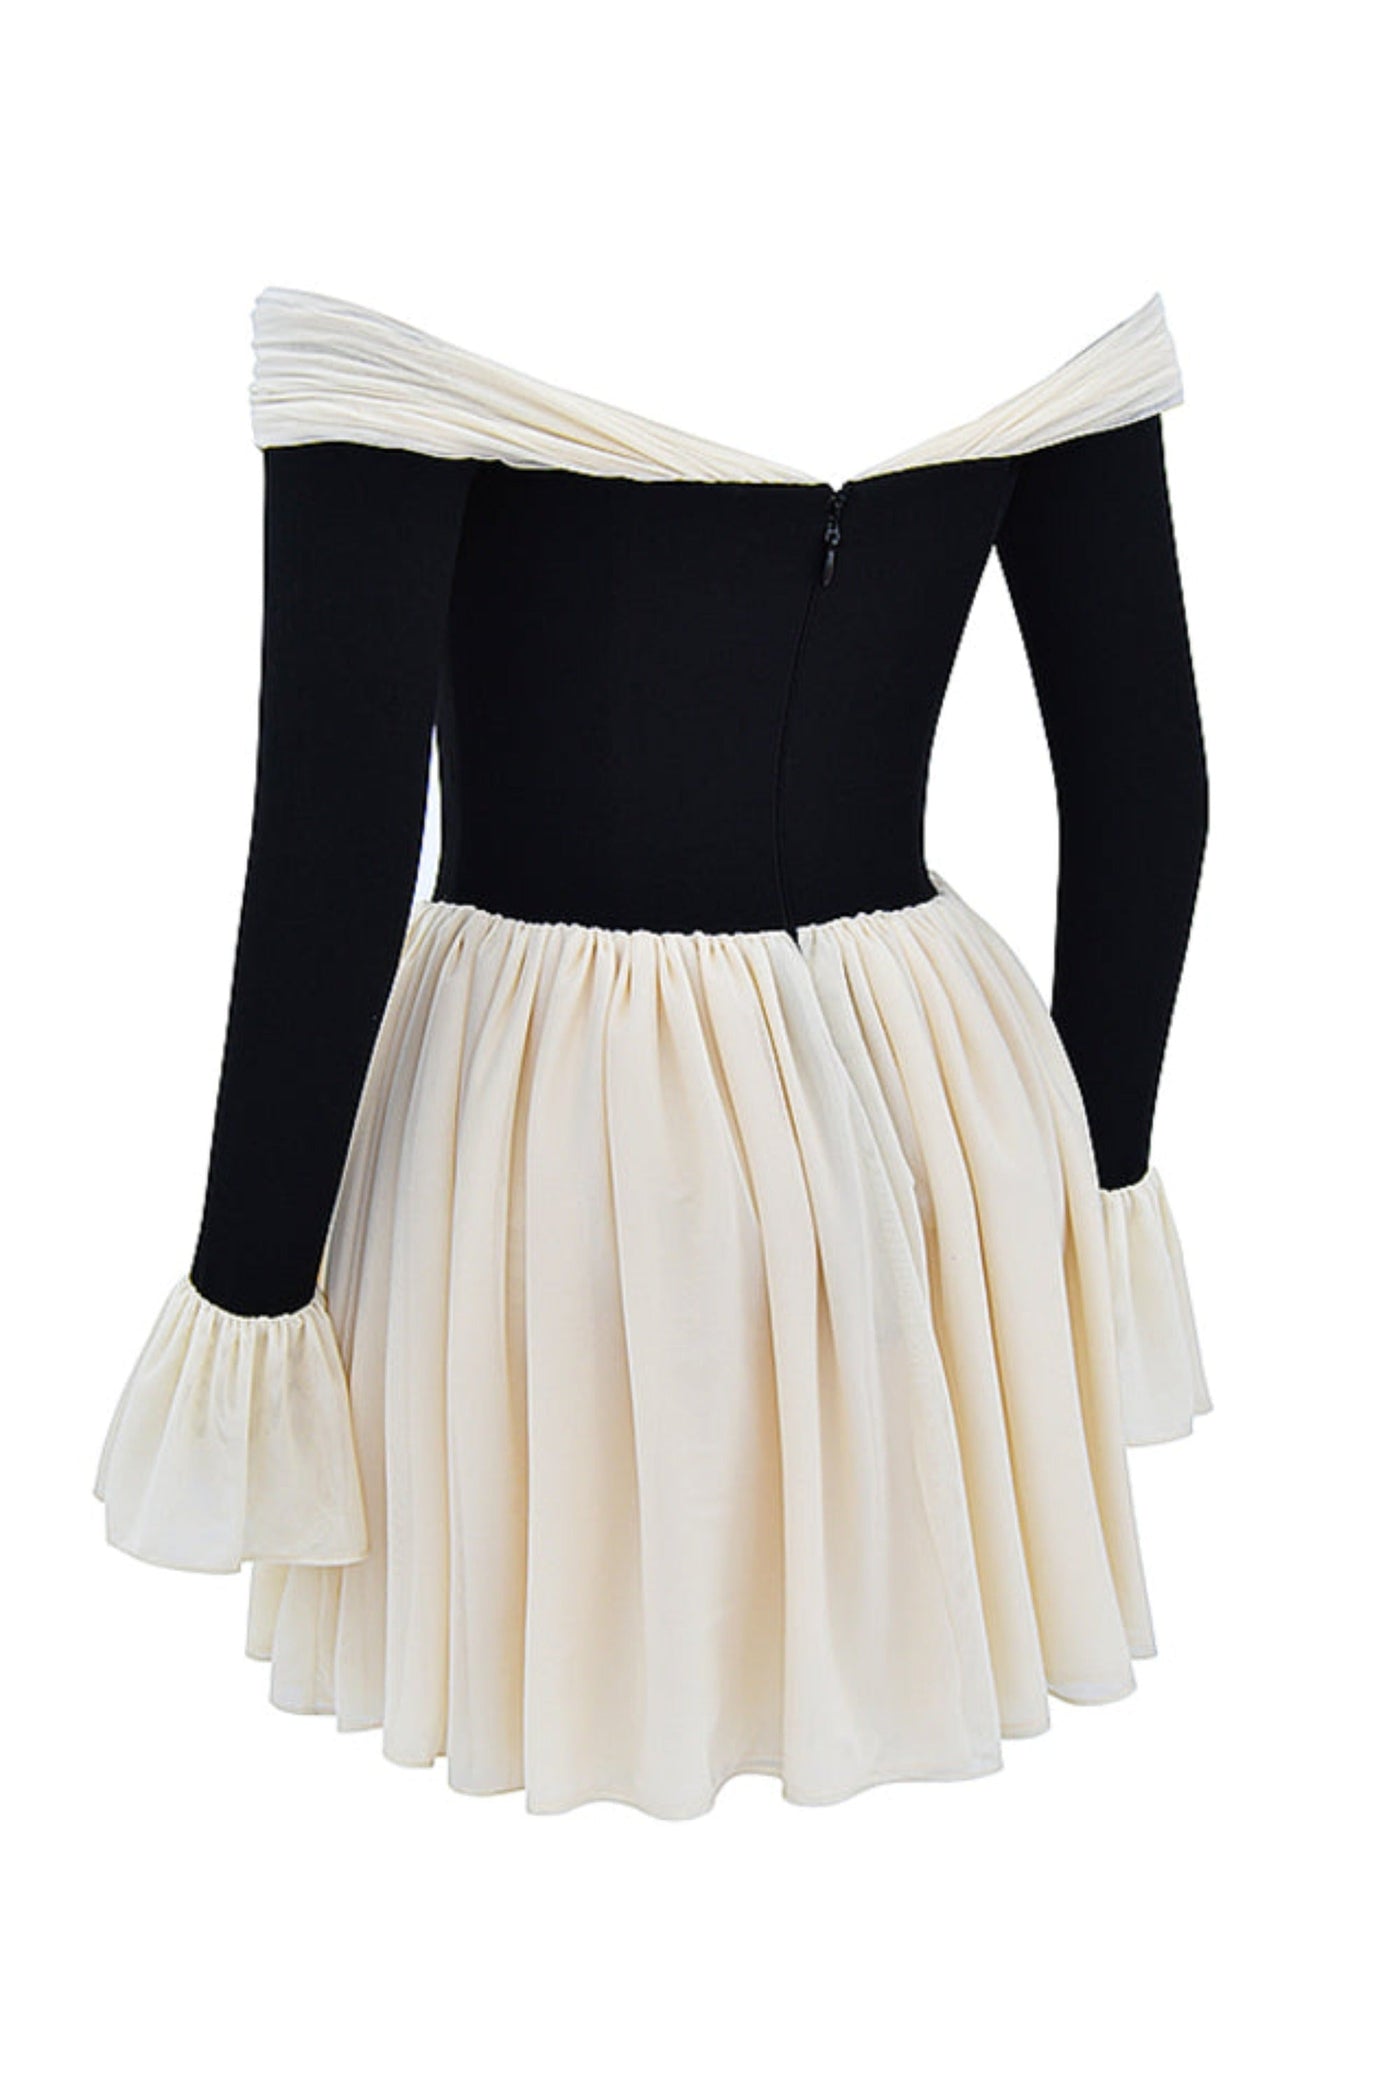 Ava Black & Cream Off Shoulder Mini Dress